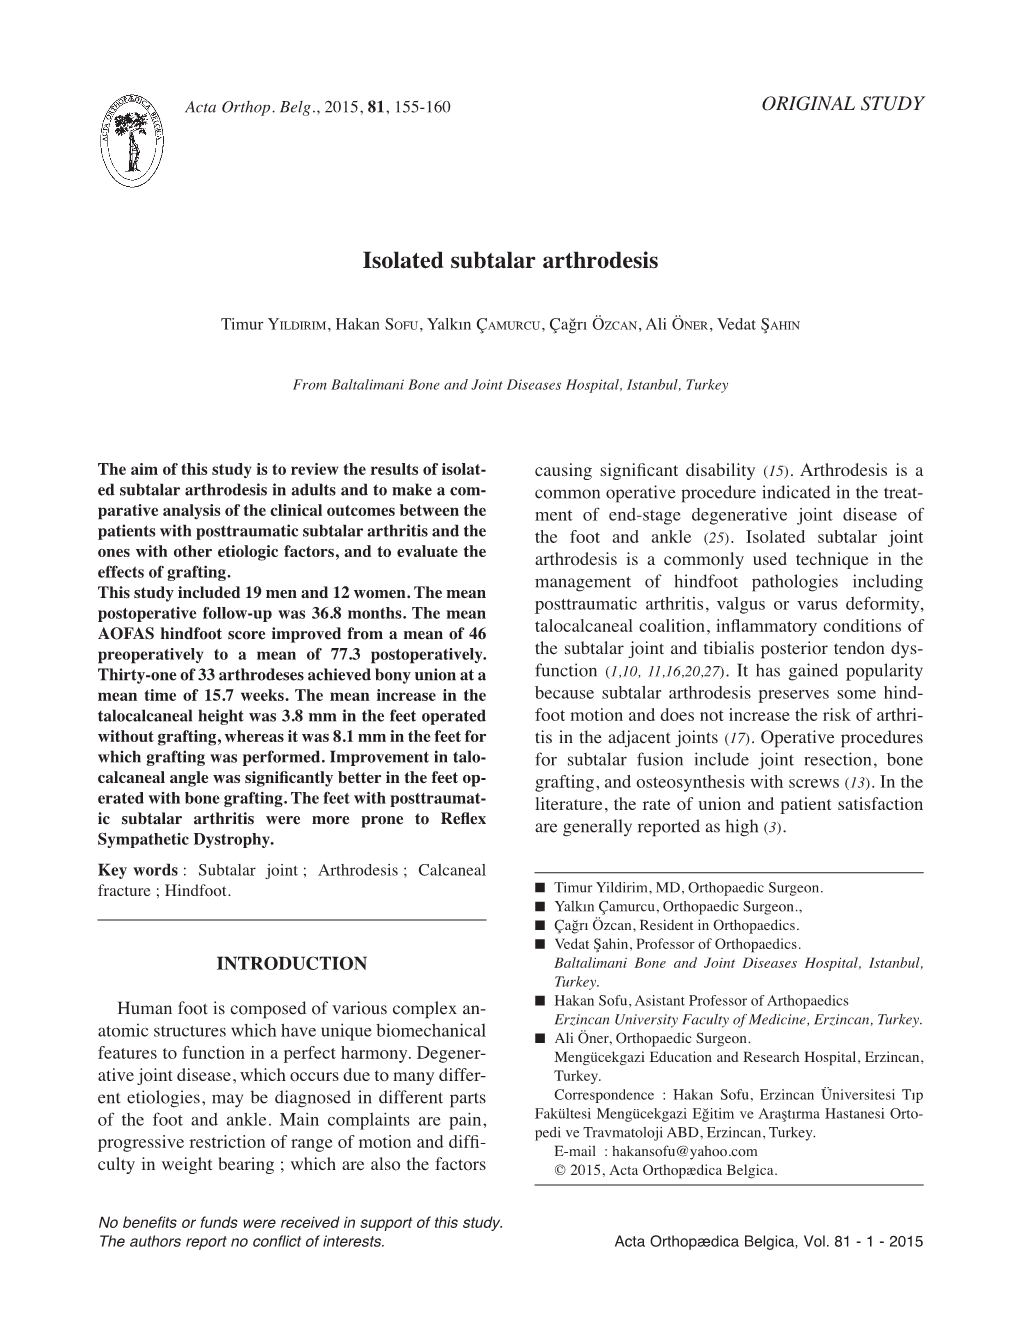 Isolated Subtalar Arthrodesis